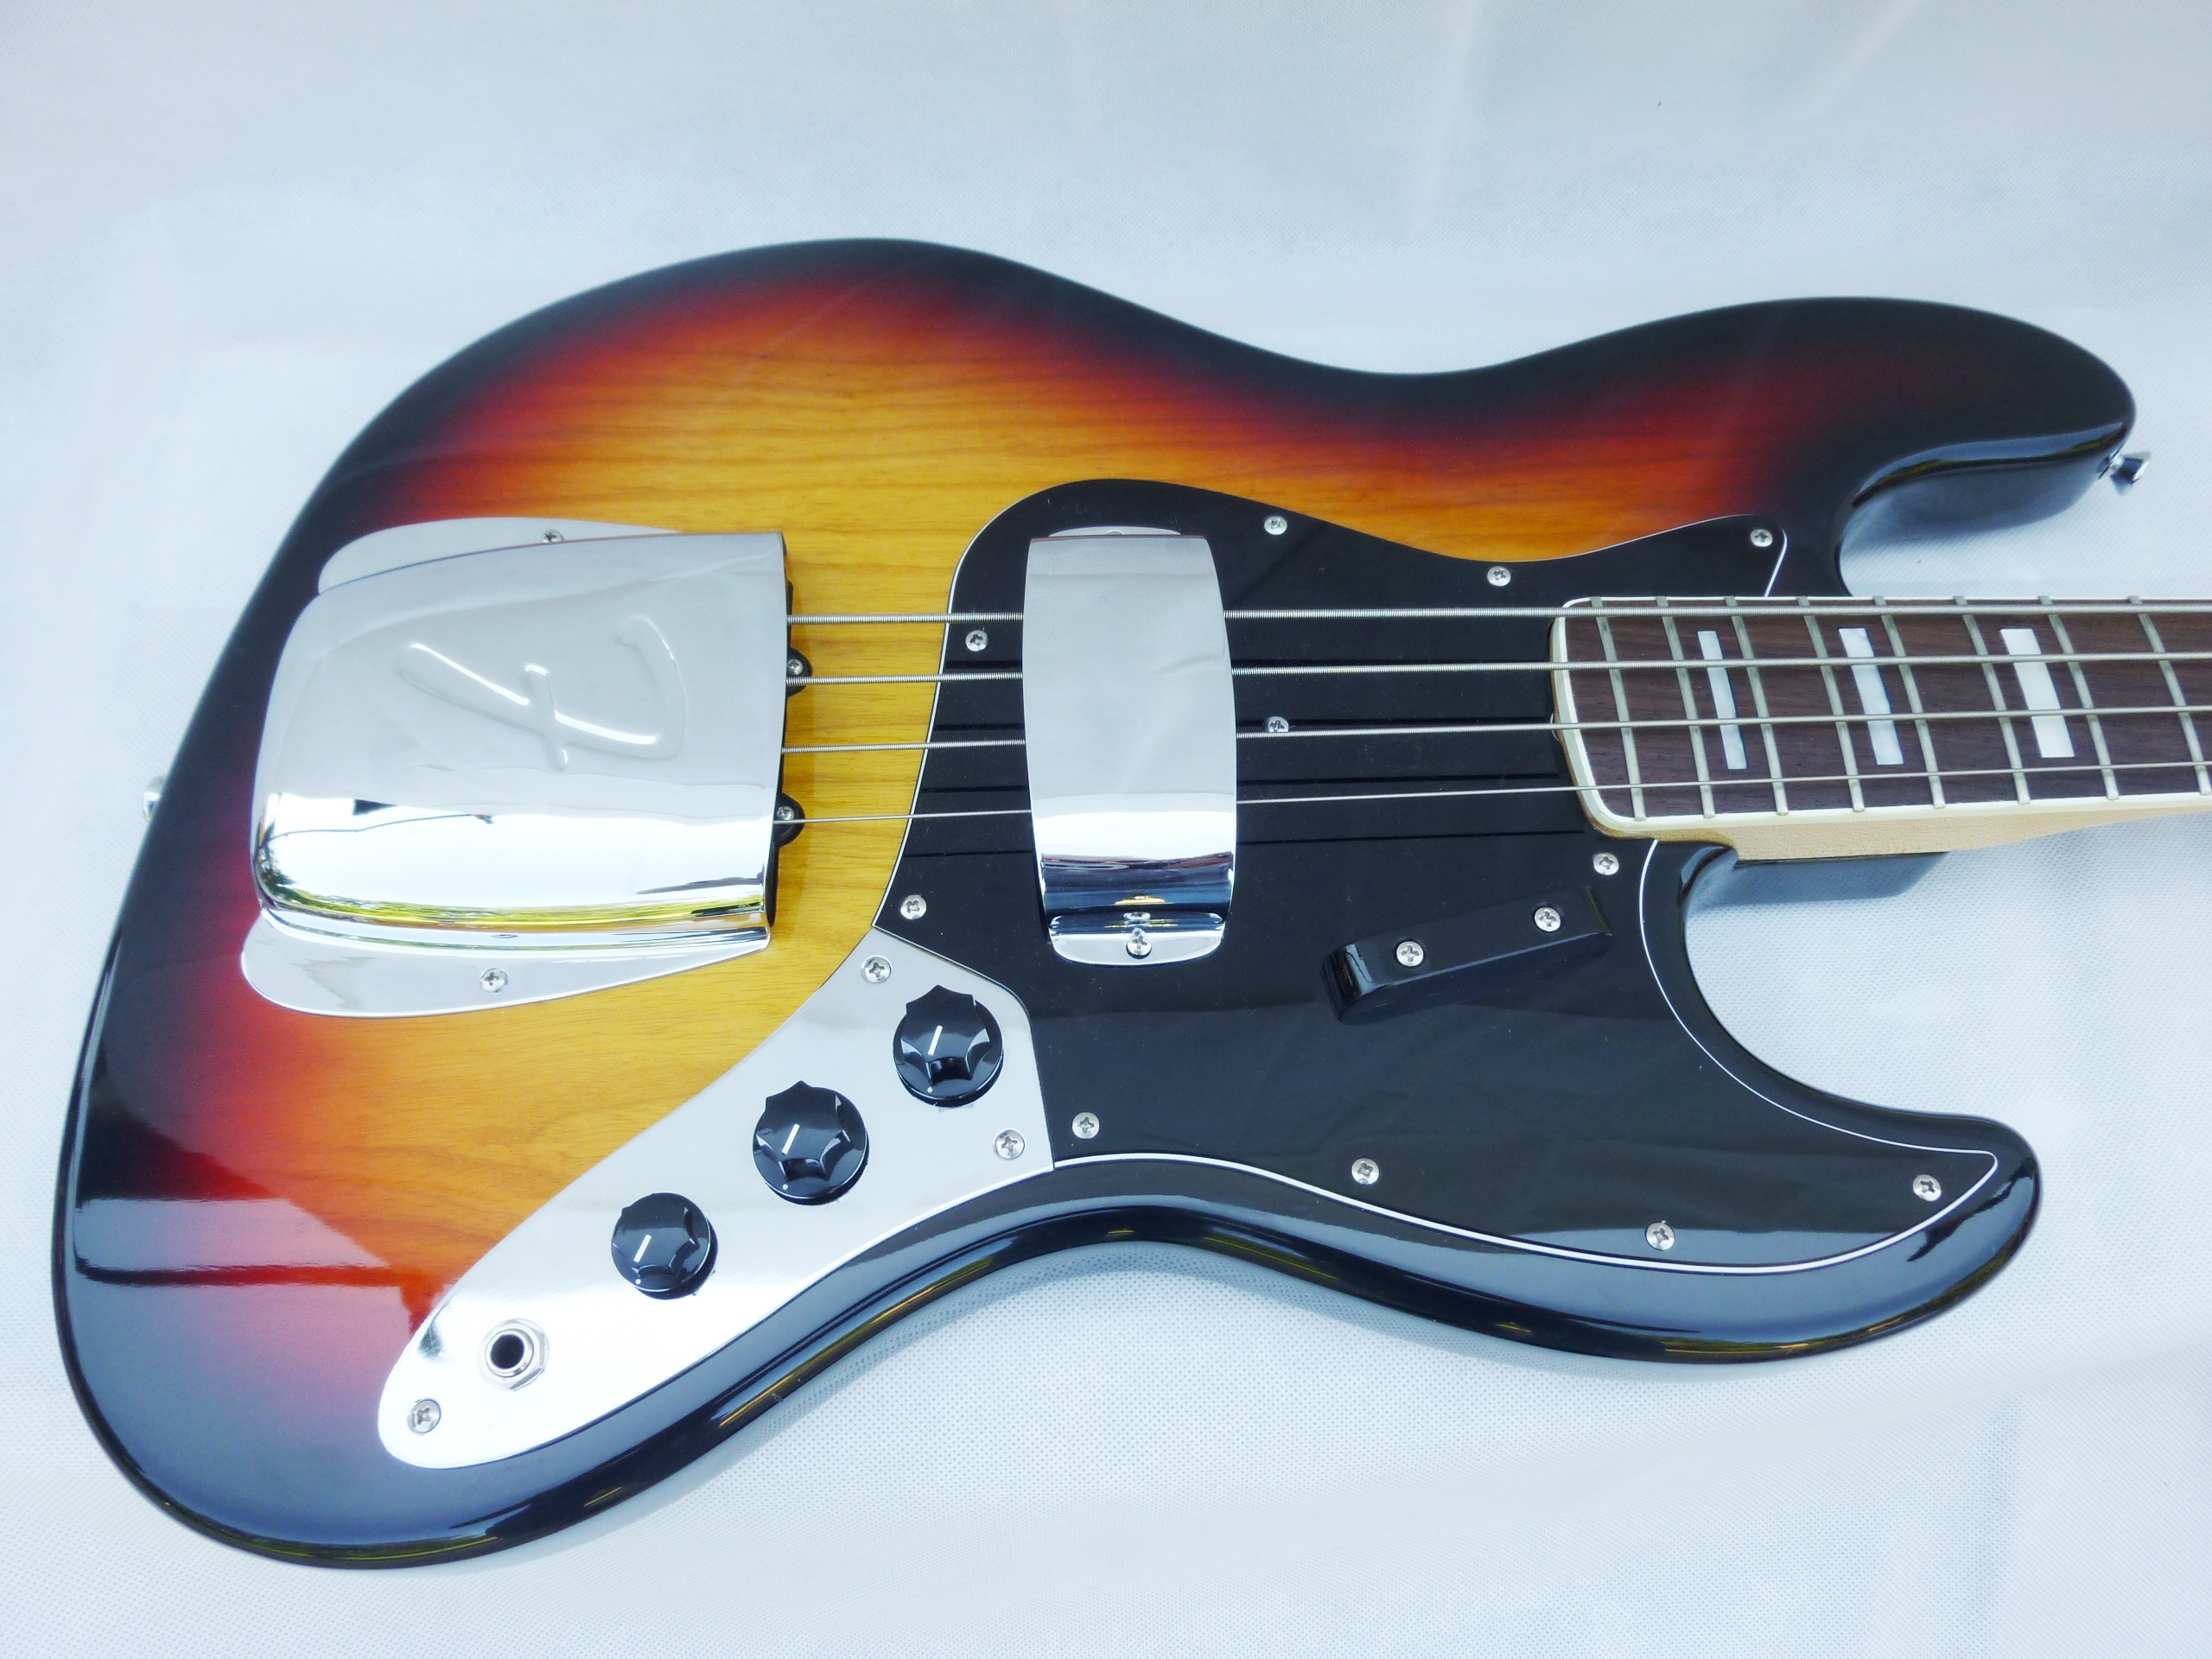 1985 Fender Jazz Bass Japan Sunburst Black Guard Rosewood Neck